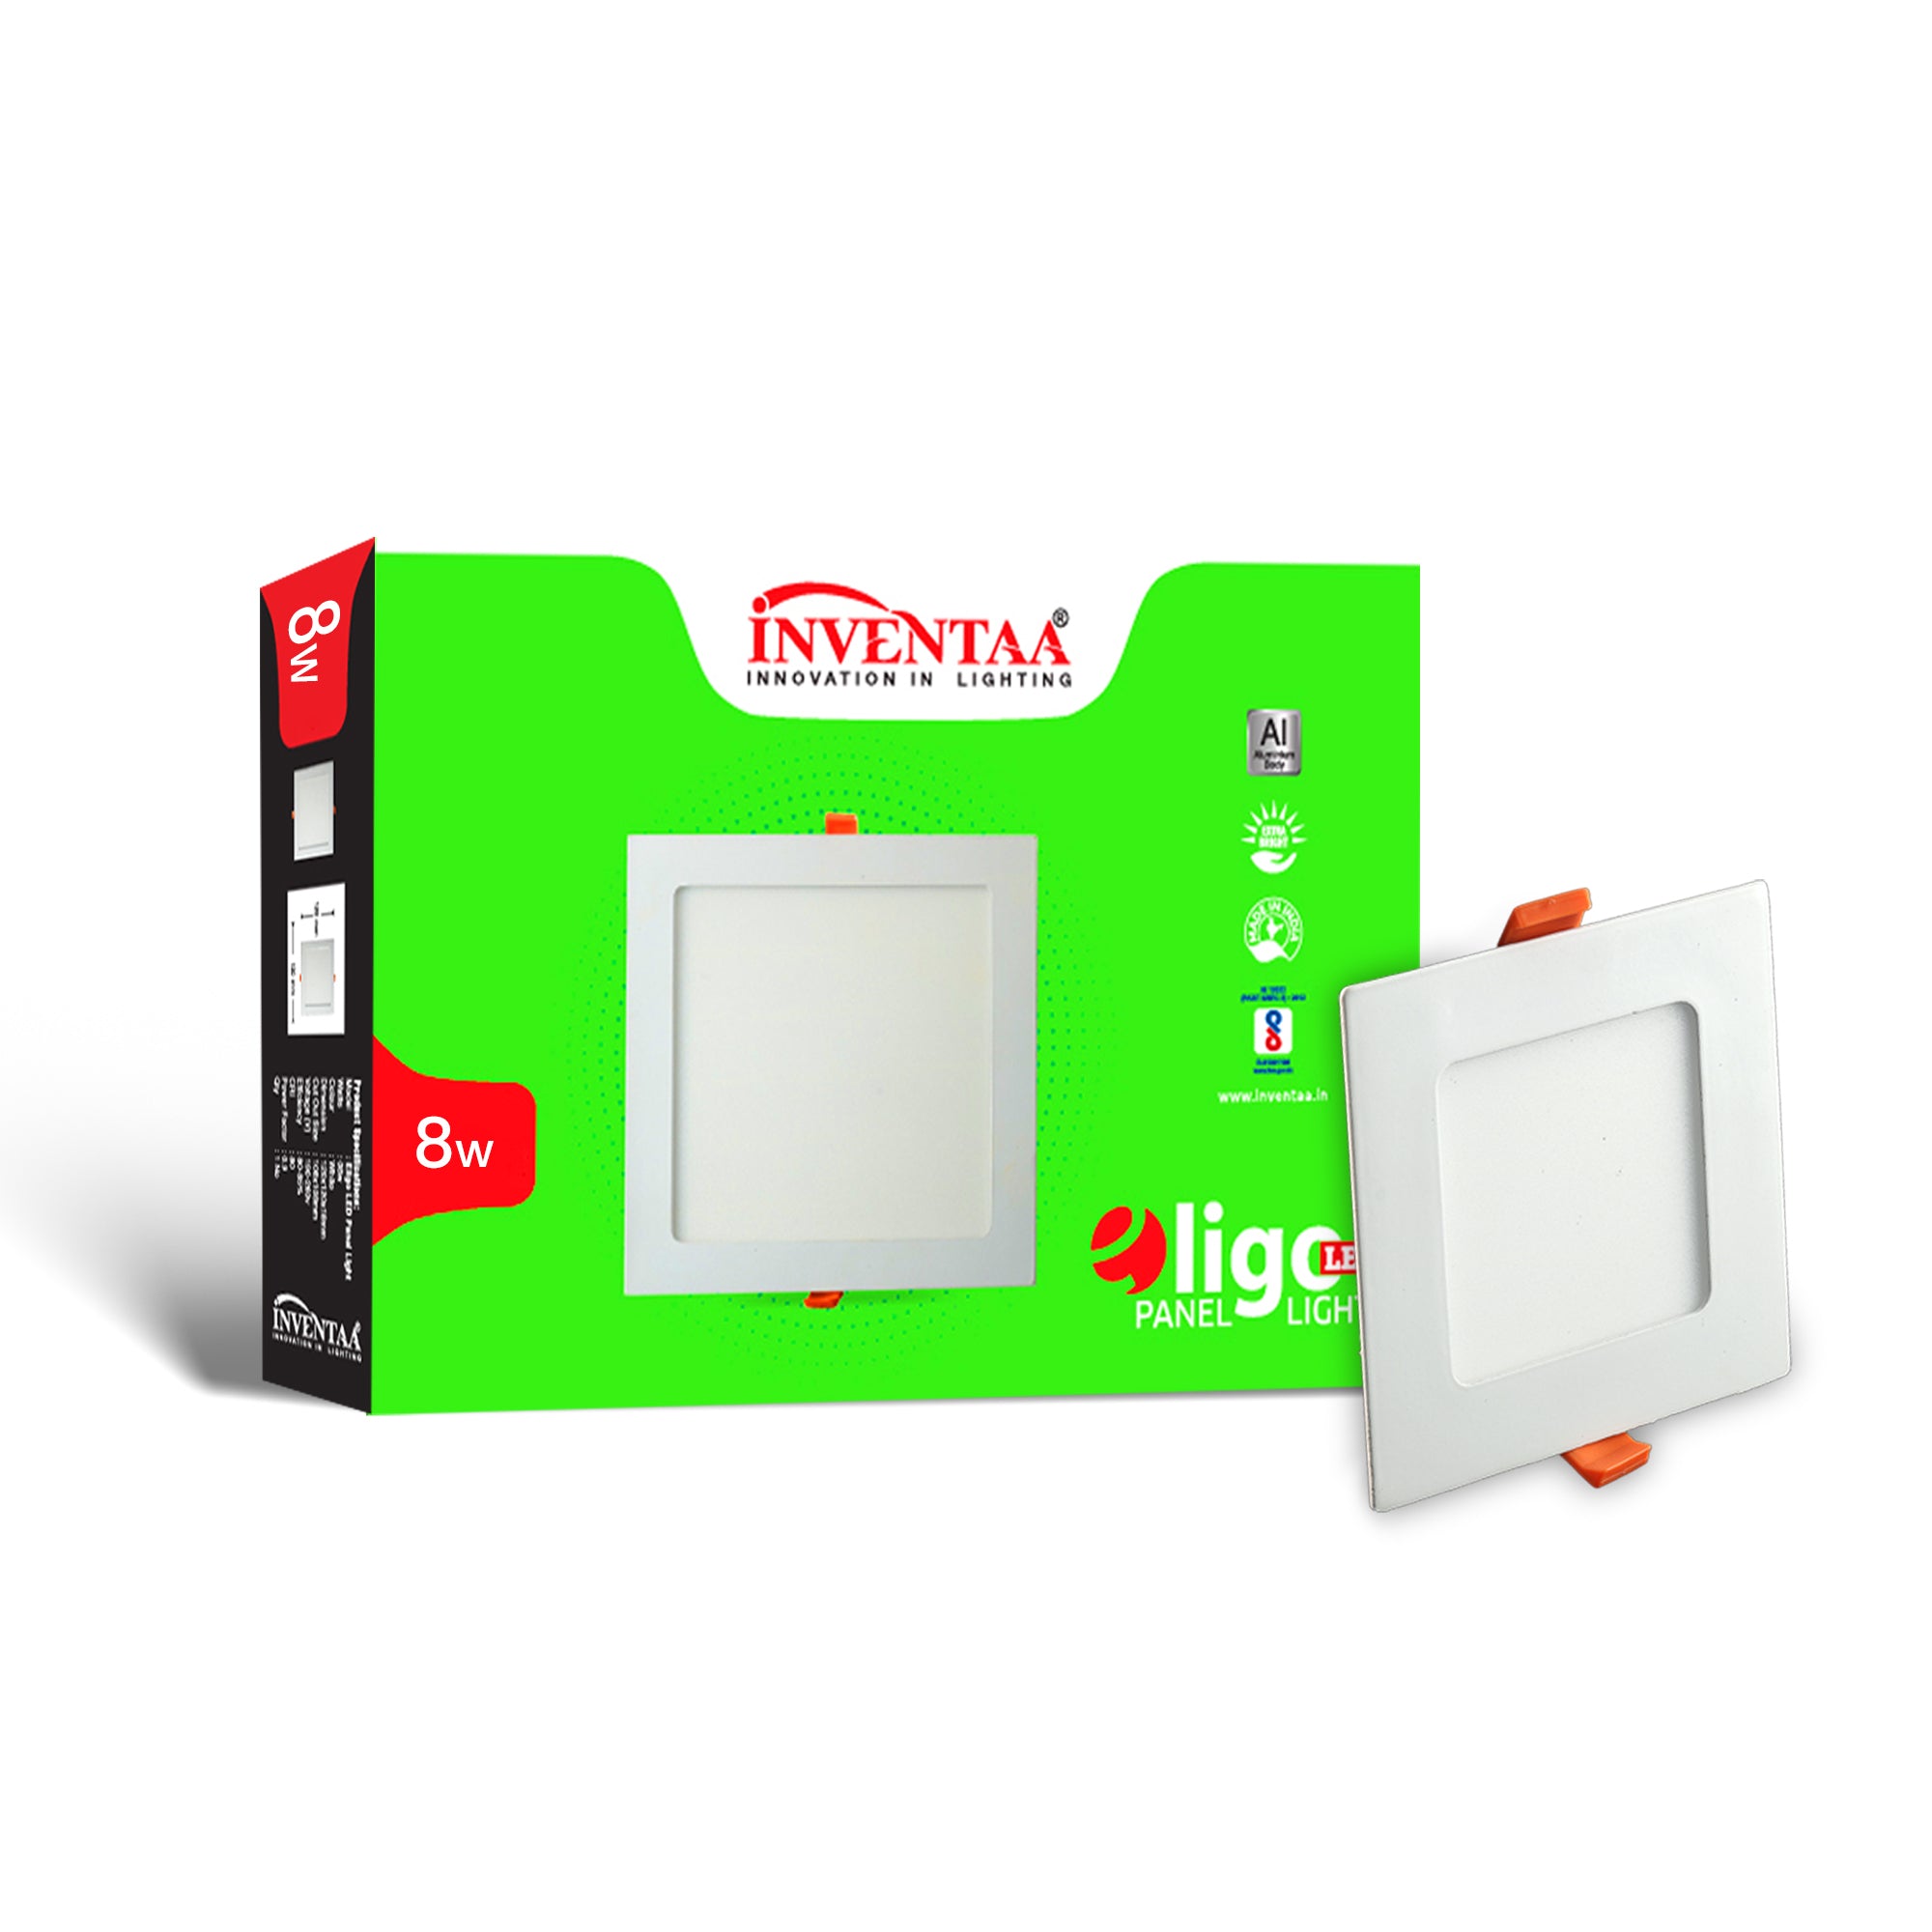 Eligo square 8W led panel light with its box enclosure #watts_8w